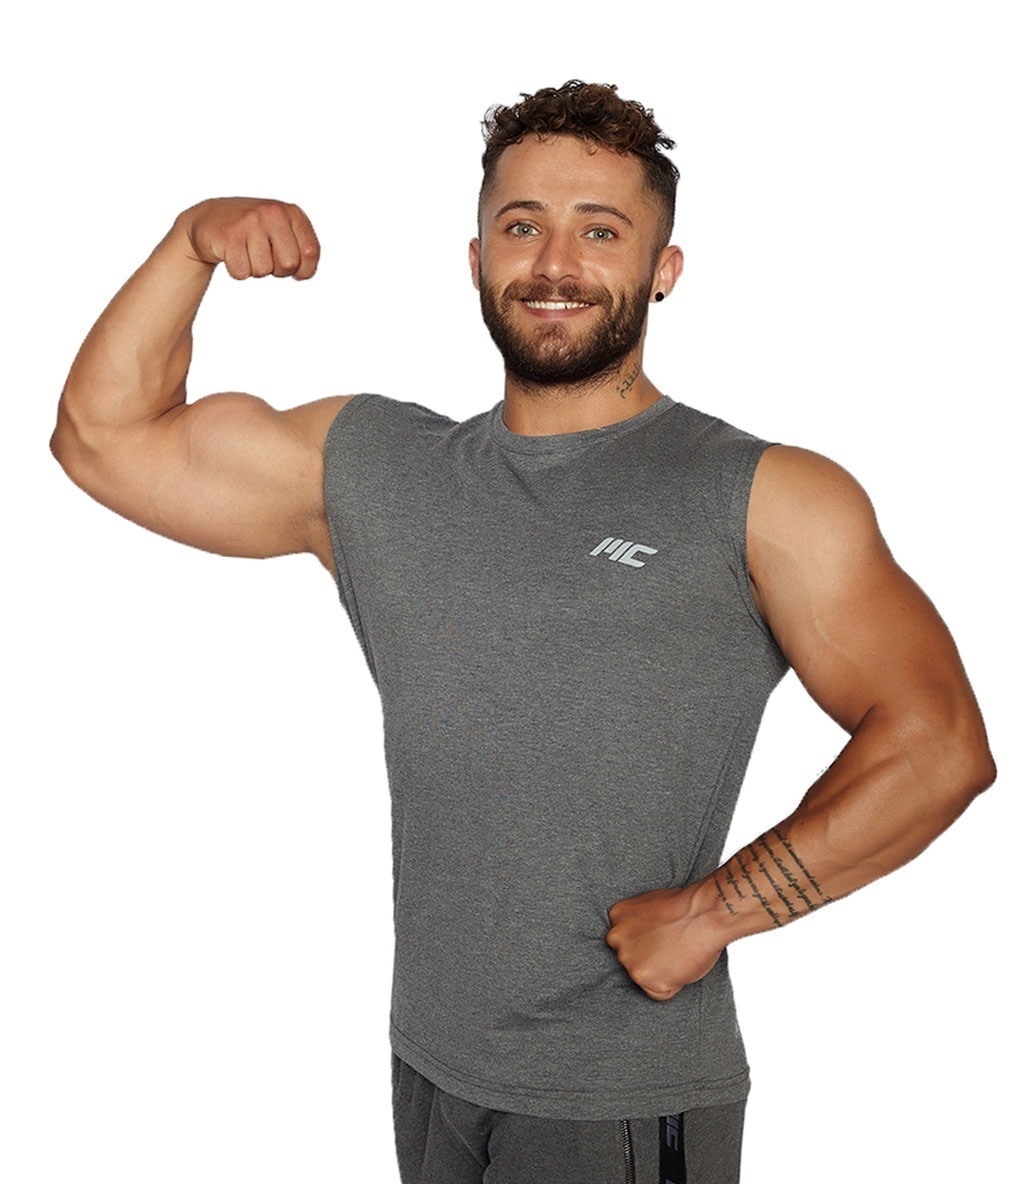 MuscleCloth Training Kolsuz T-Shirt - Gri